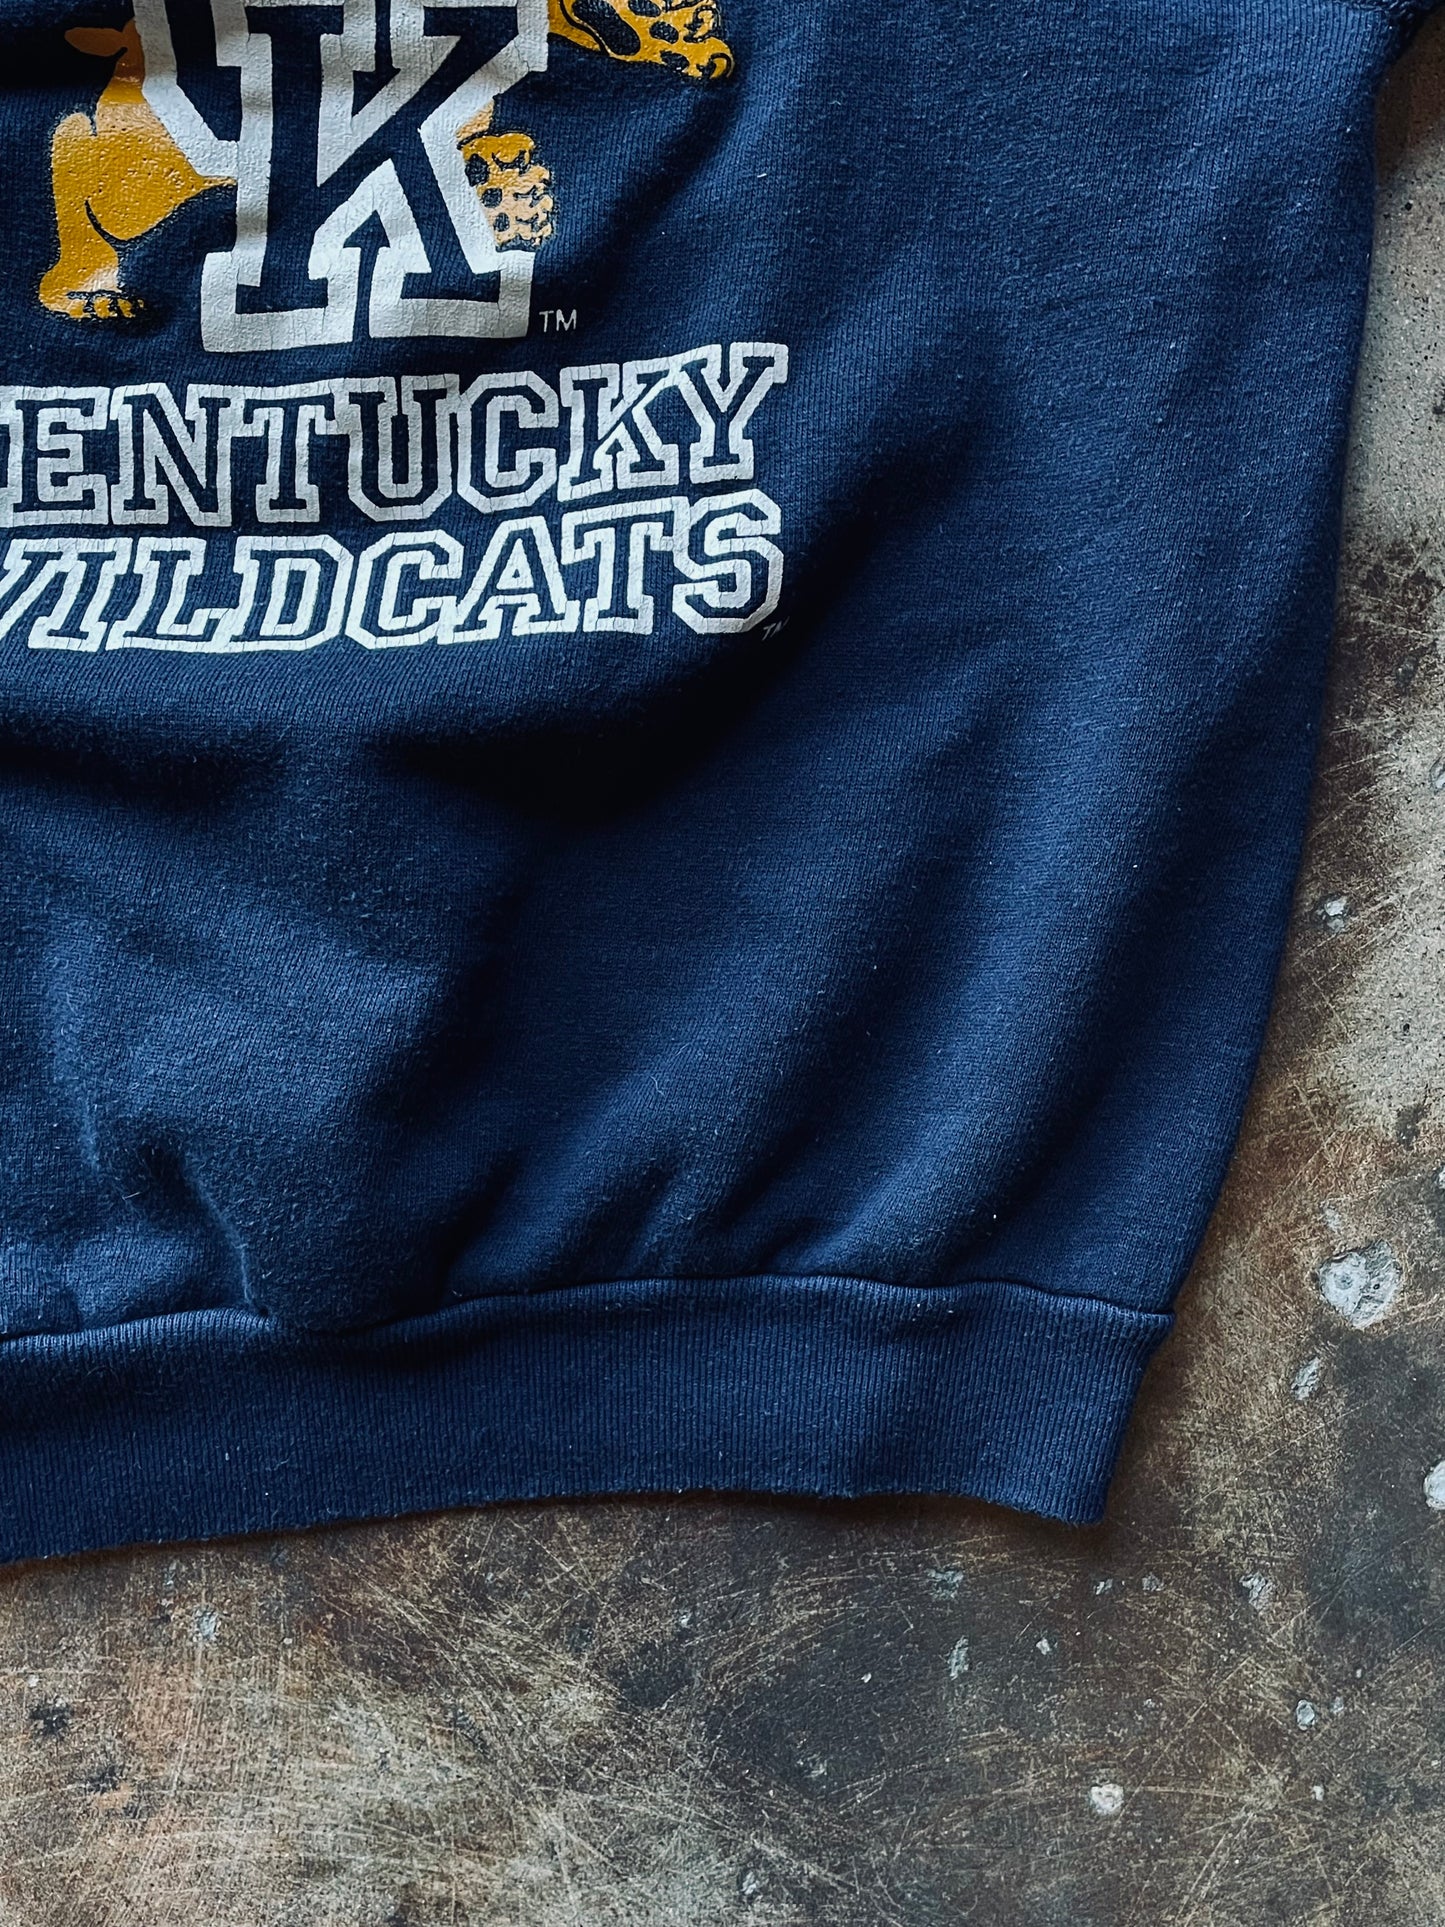 1970’s Wolf & Sons Kentucky Wildcats Sweatshirt | Medium